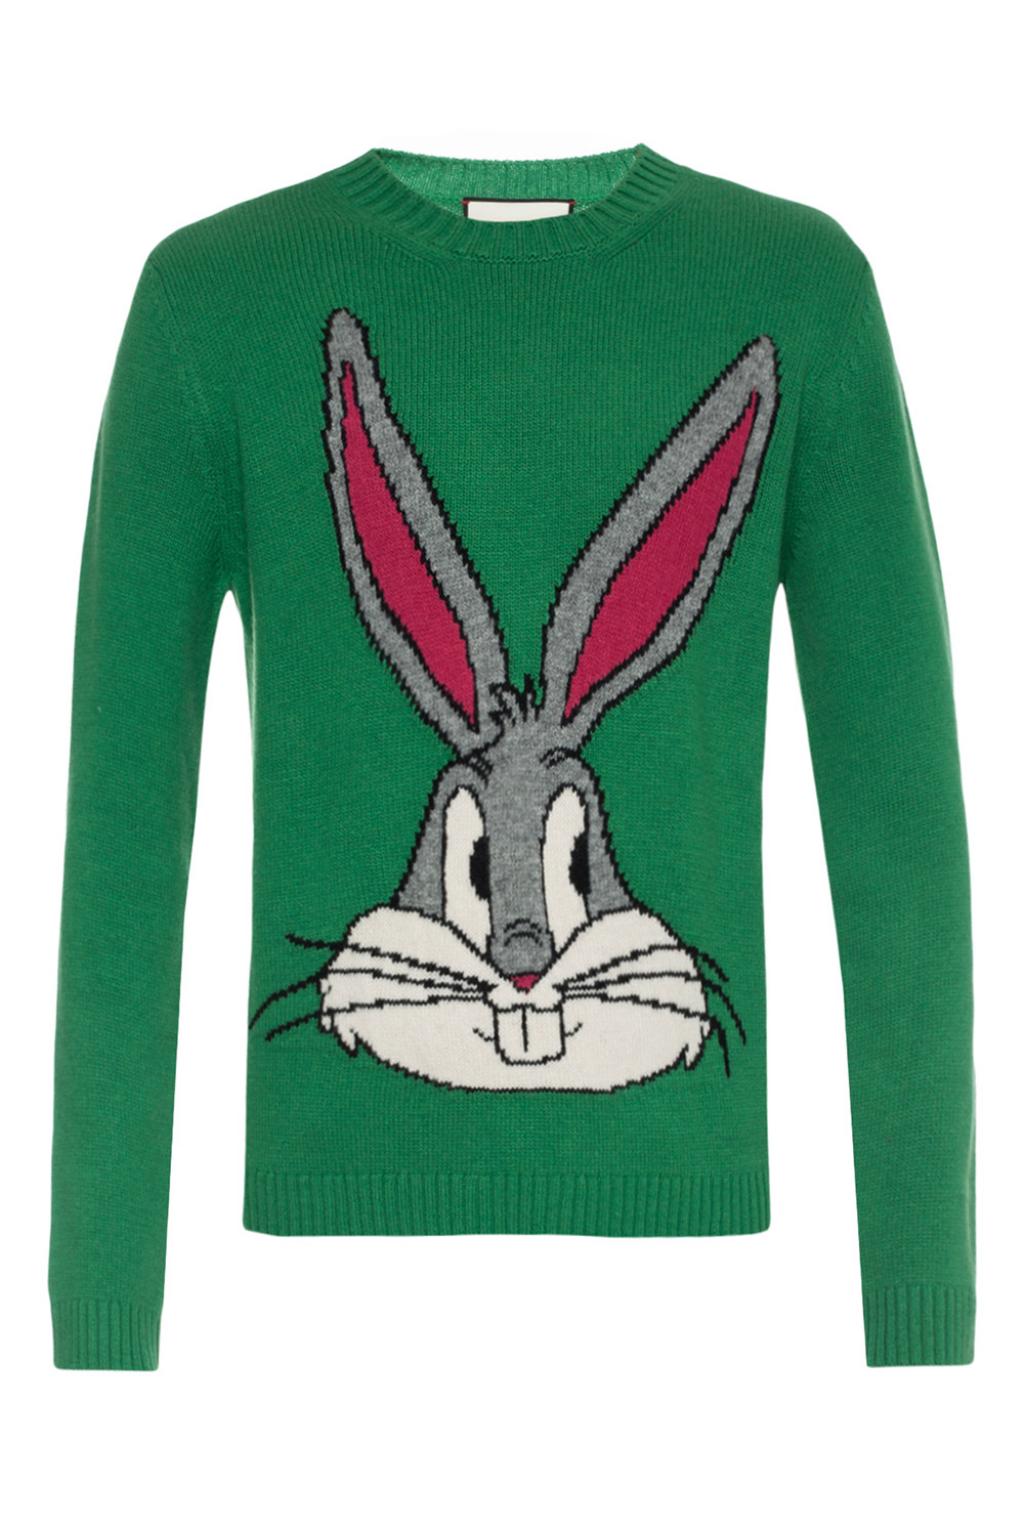 bugs bunny sweater gucci